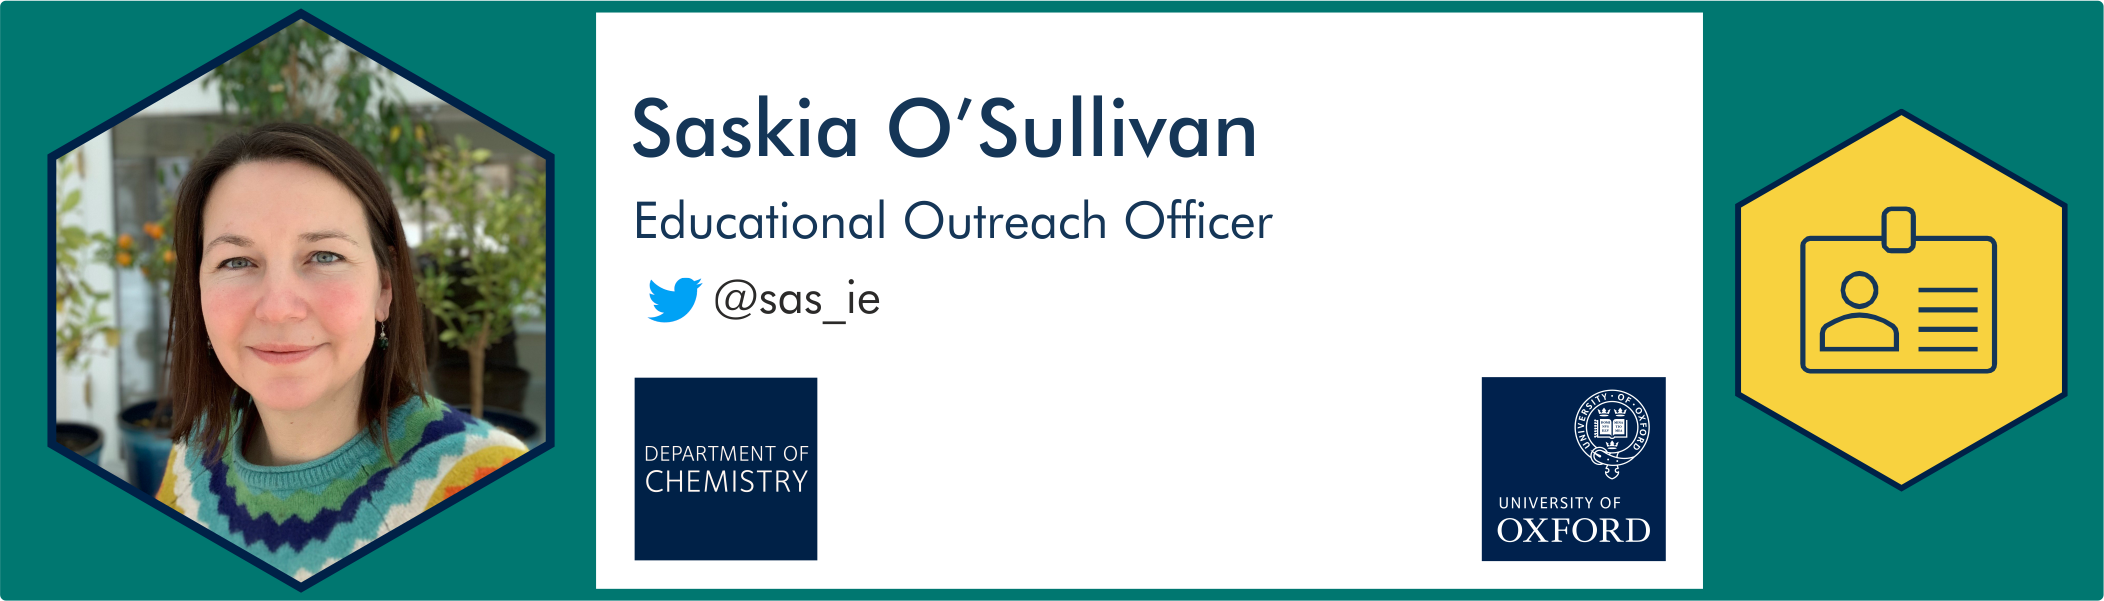 Saskia O'Sullivan further information 